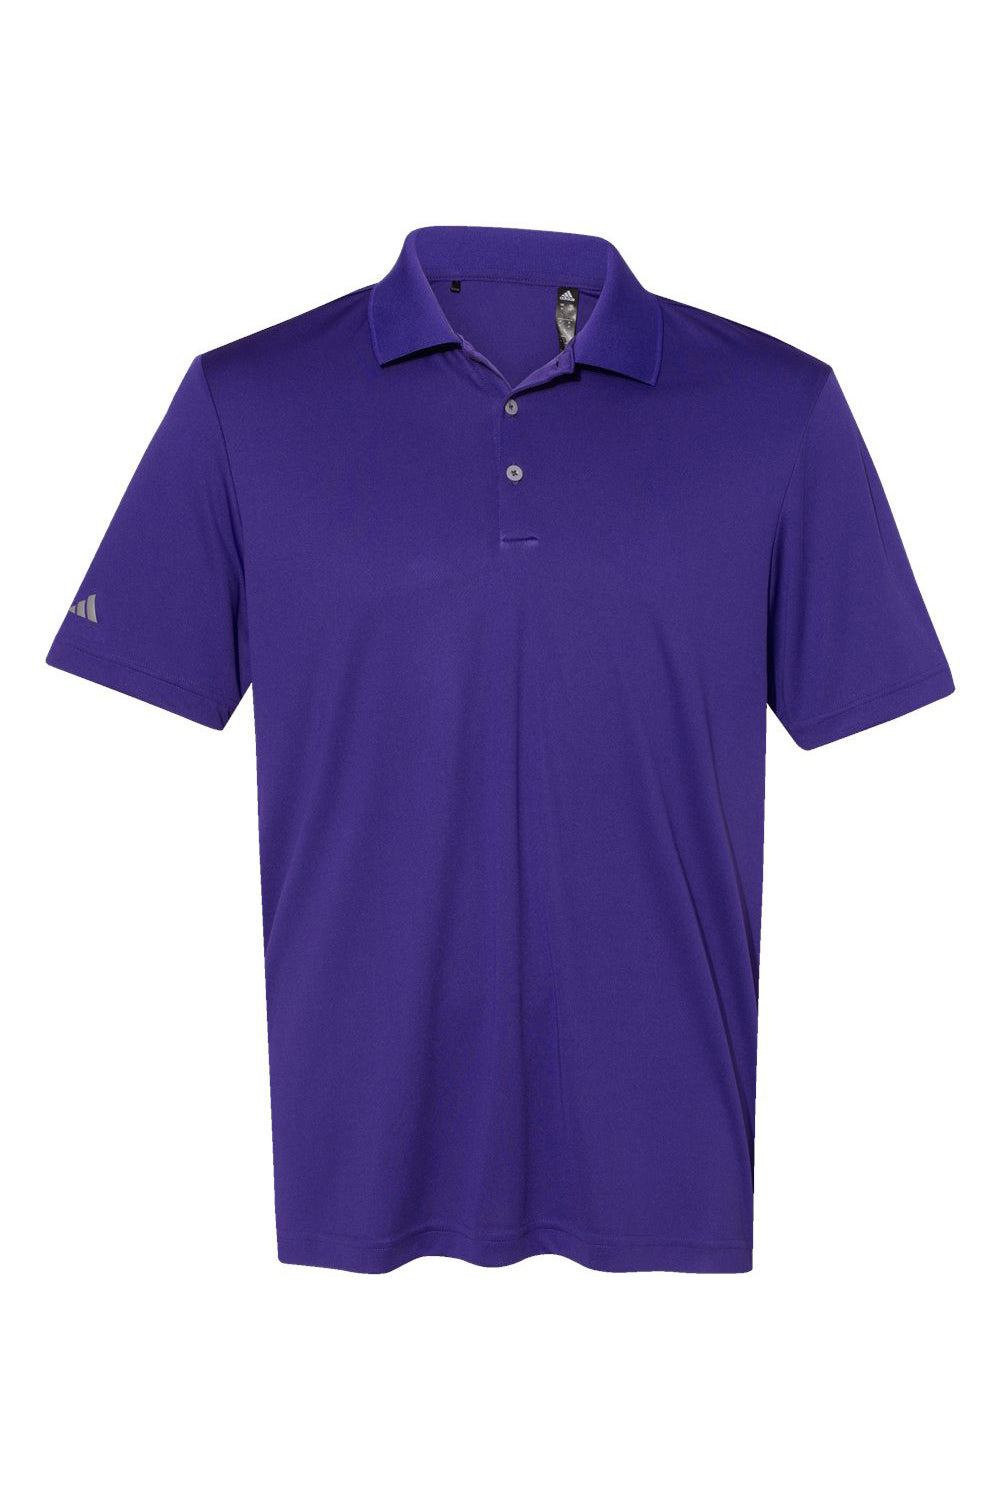 Adidas A230 Mens Performance Short Sleeve Polo Shirt Collegiate Purple Flat Front